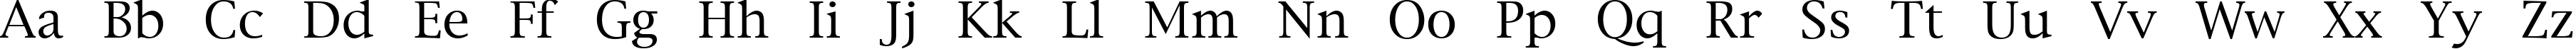 Пример написания английского алфавита шрифтом New York Plain:001.003